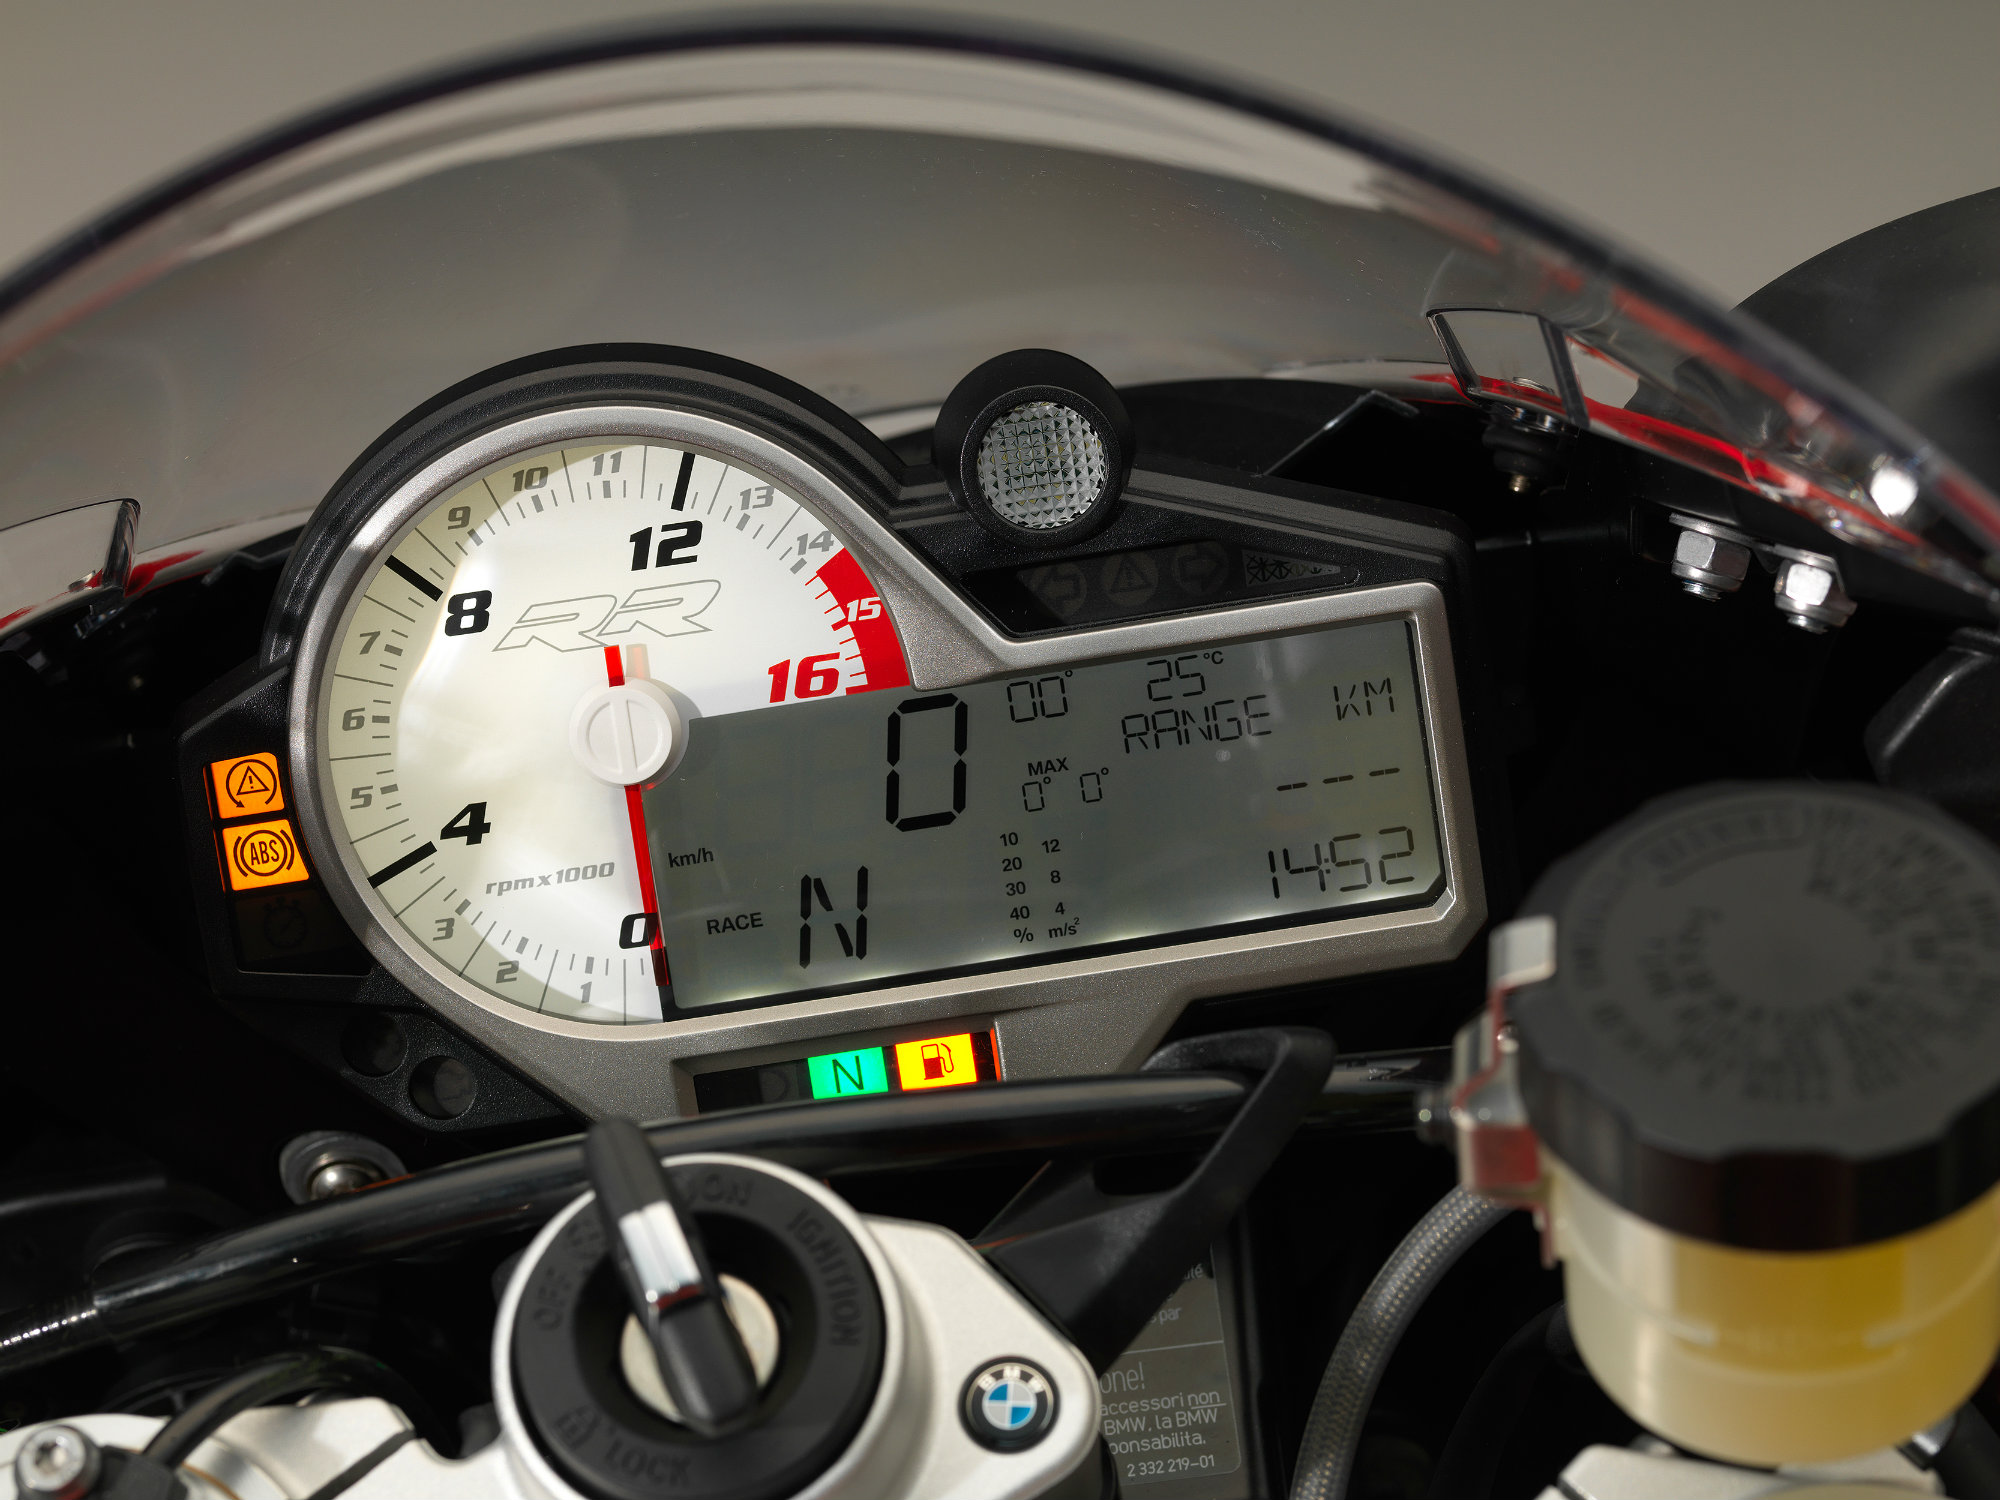 Intermot 2014: New BMW S1000RR unveiled